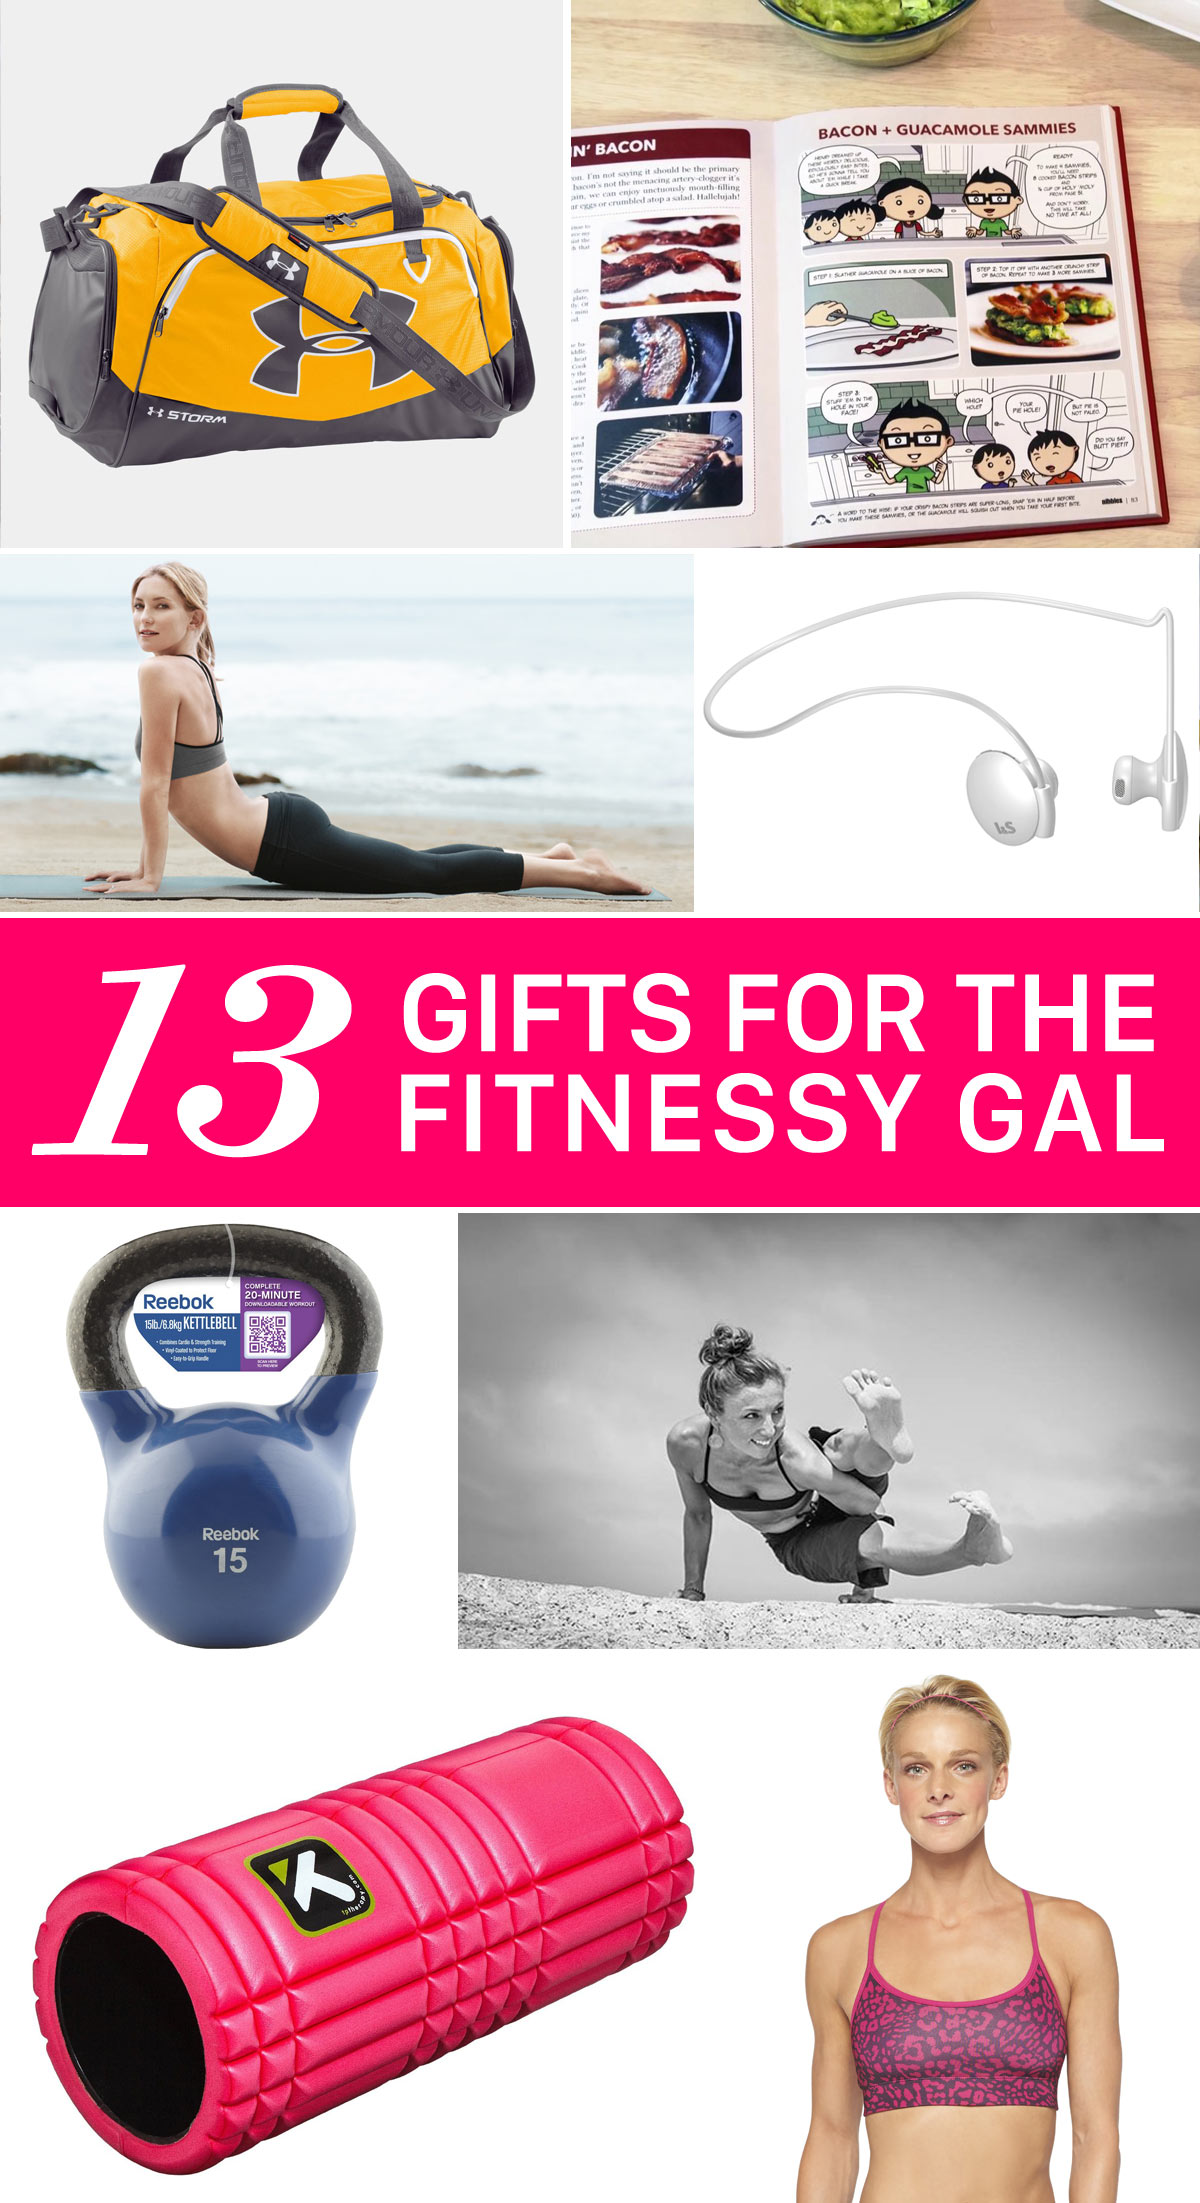 fitness gift ideas 2014